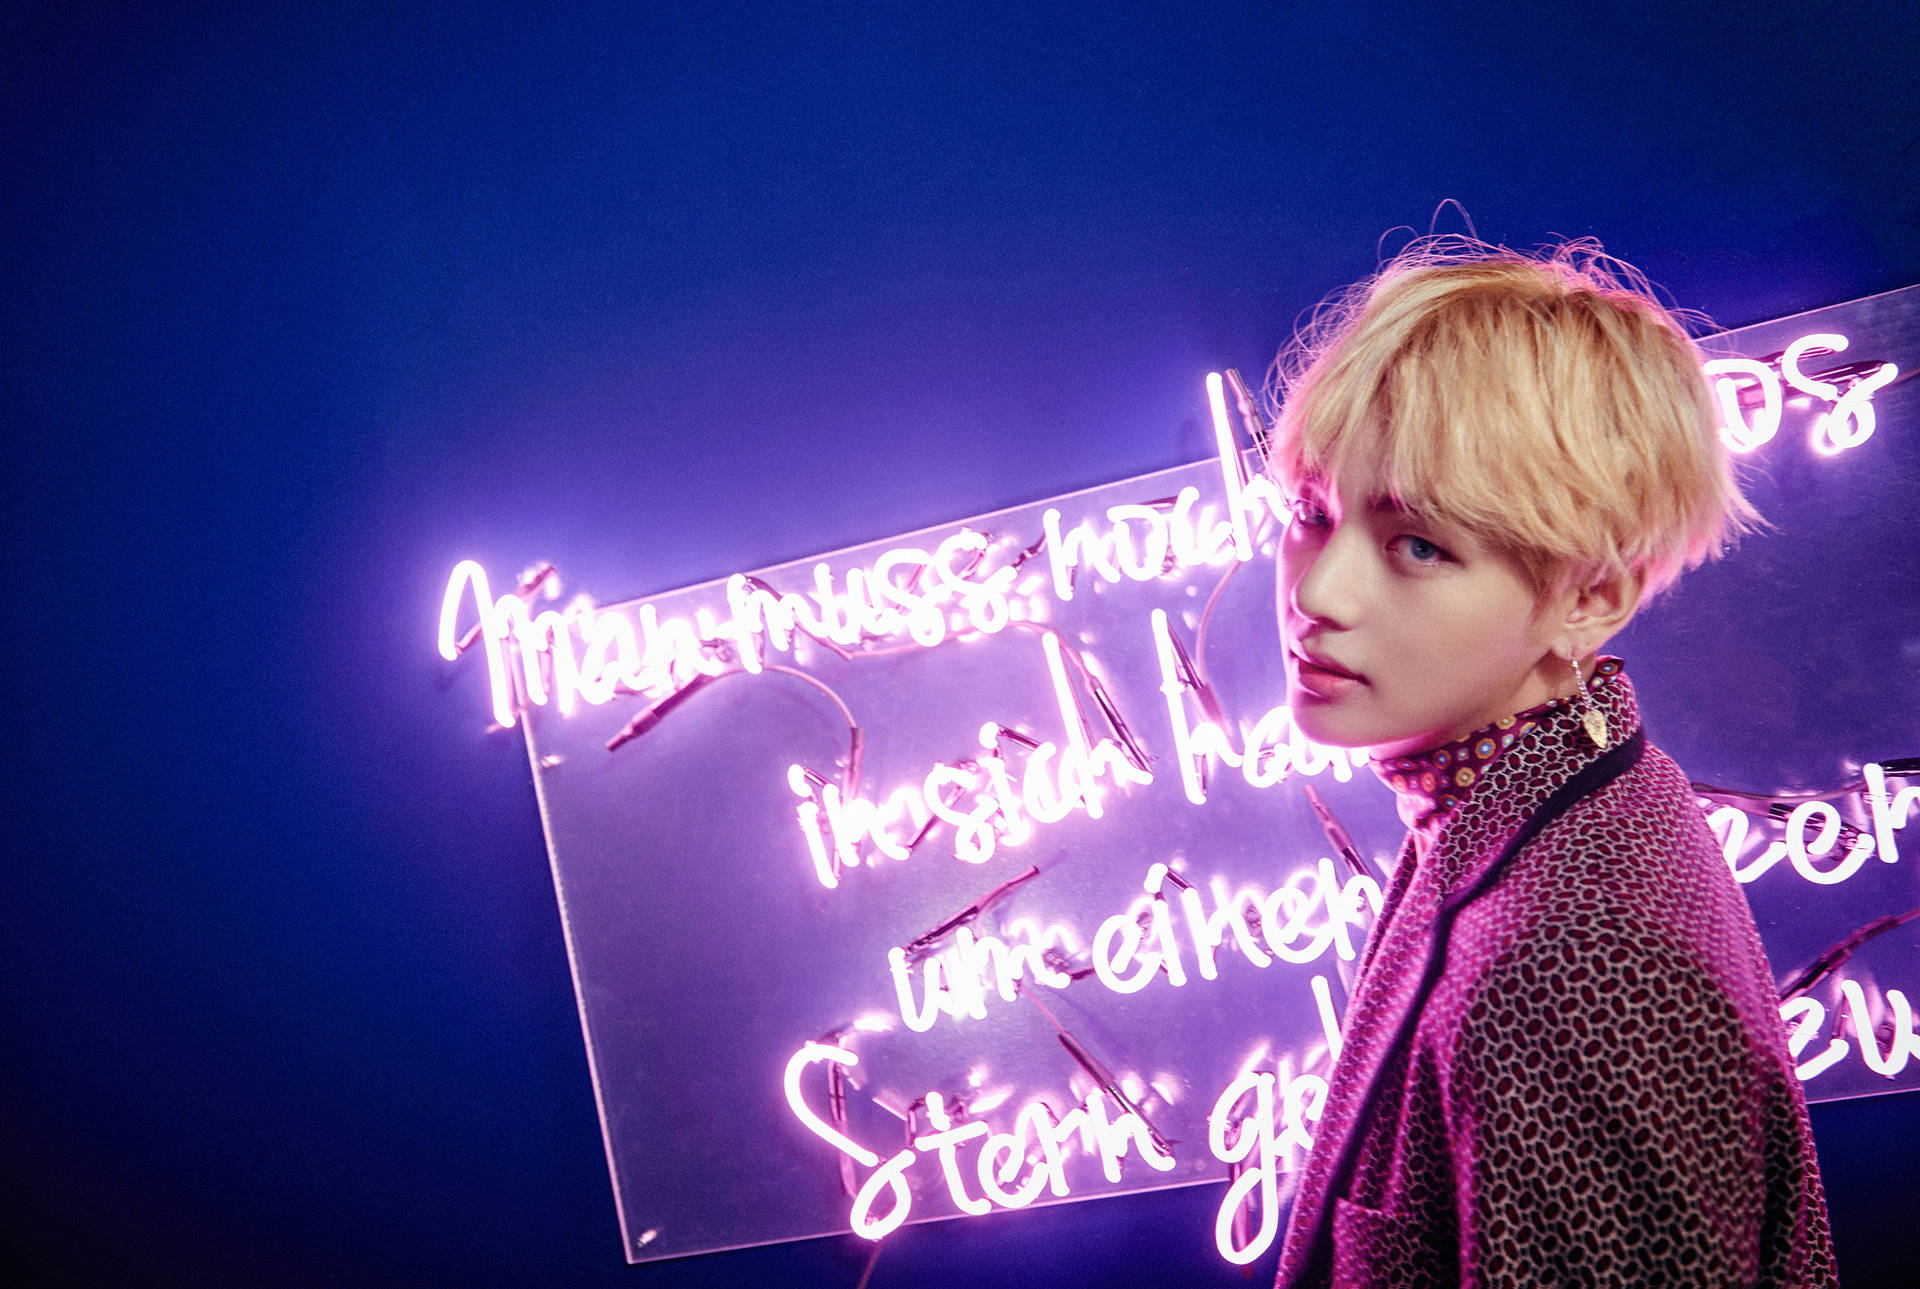 BTS Tae Hyung Glowing Neon Sign Wallpaper